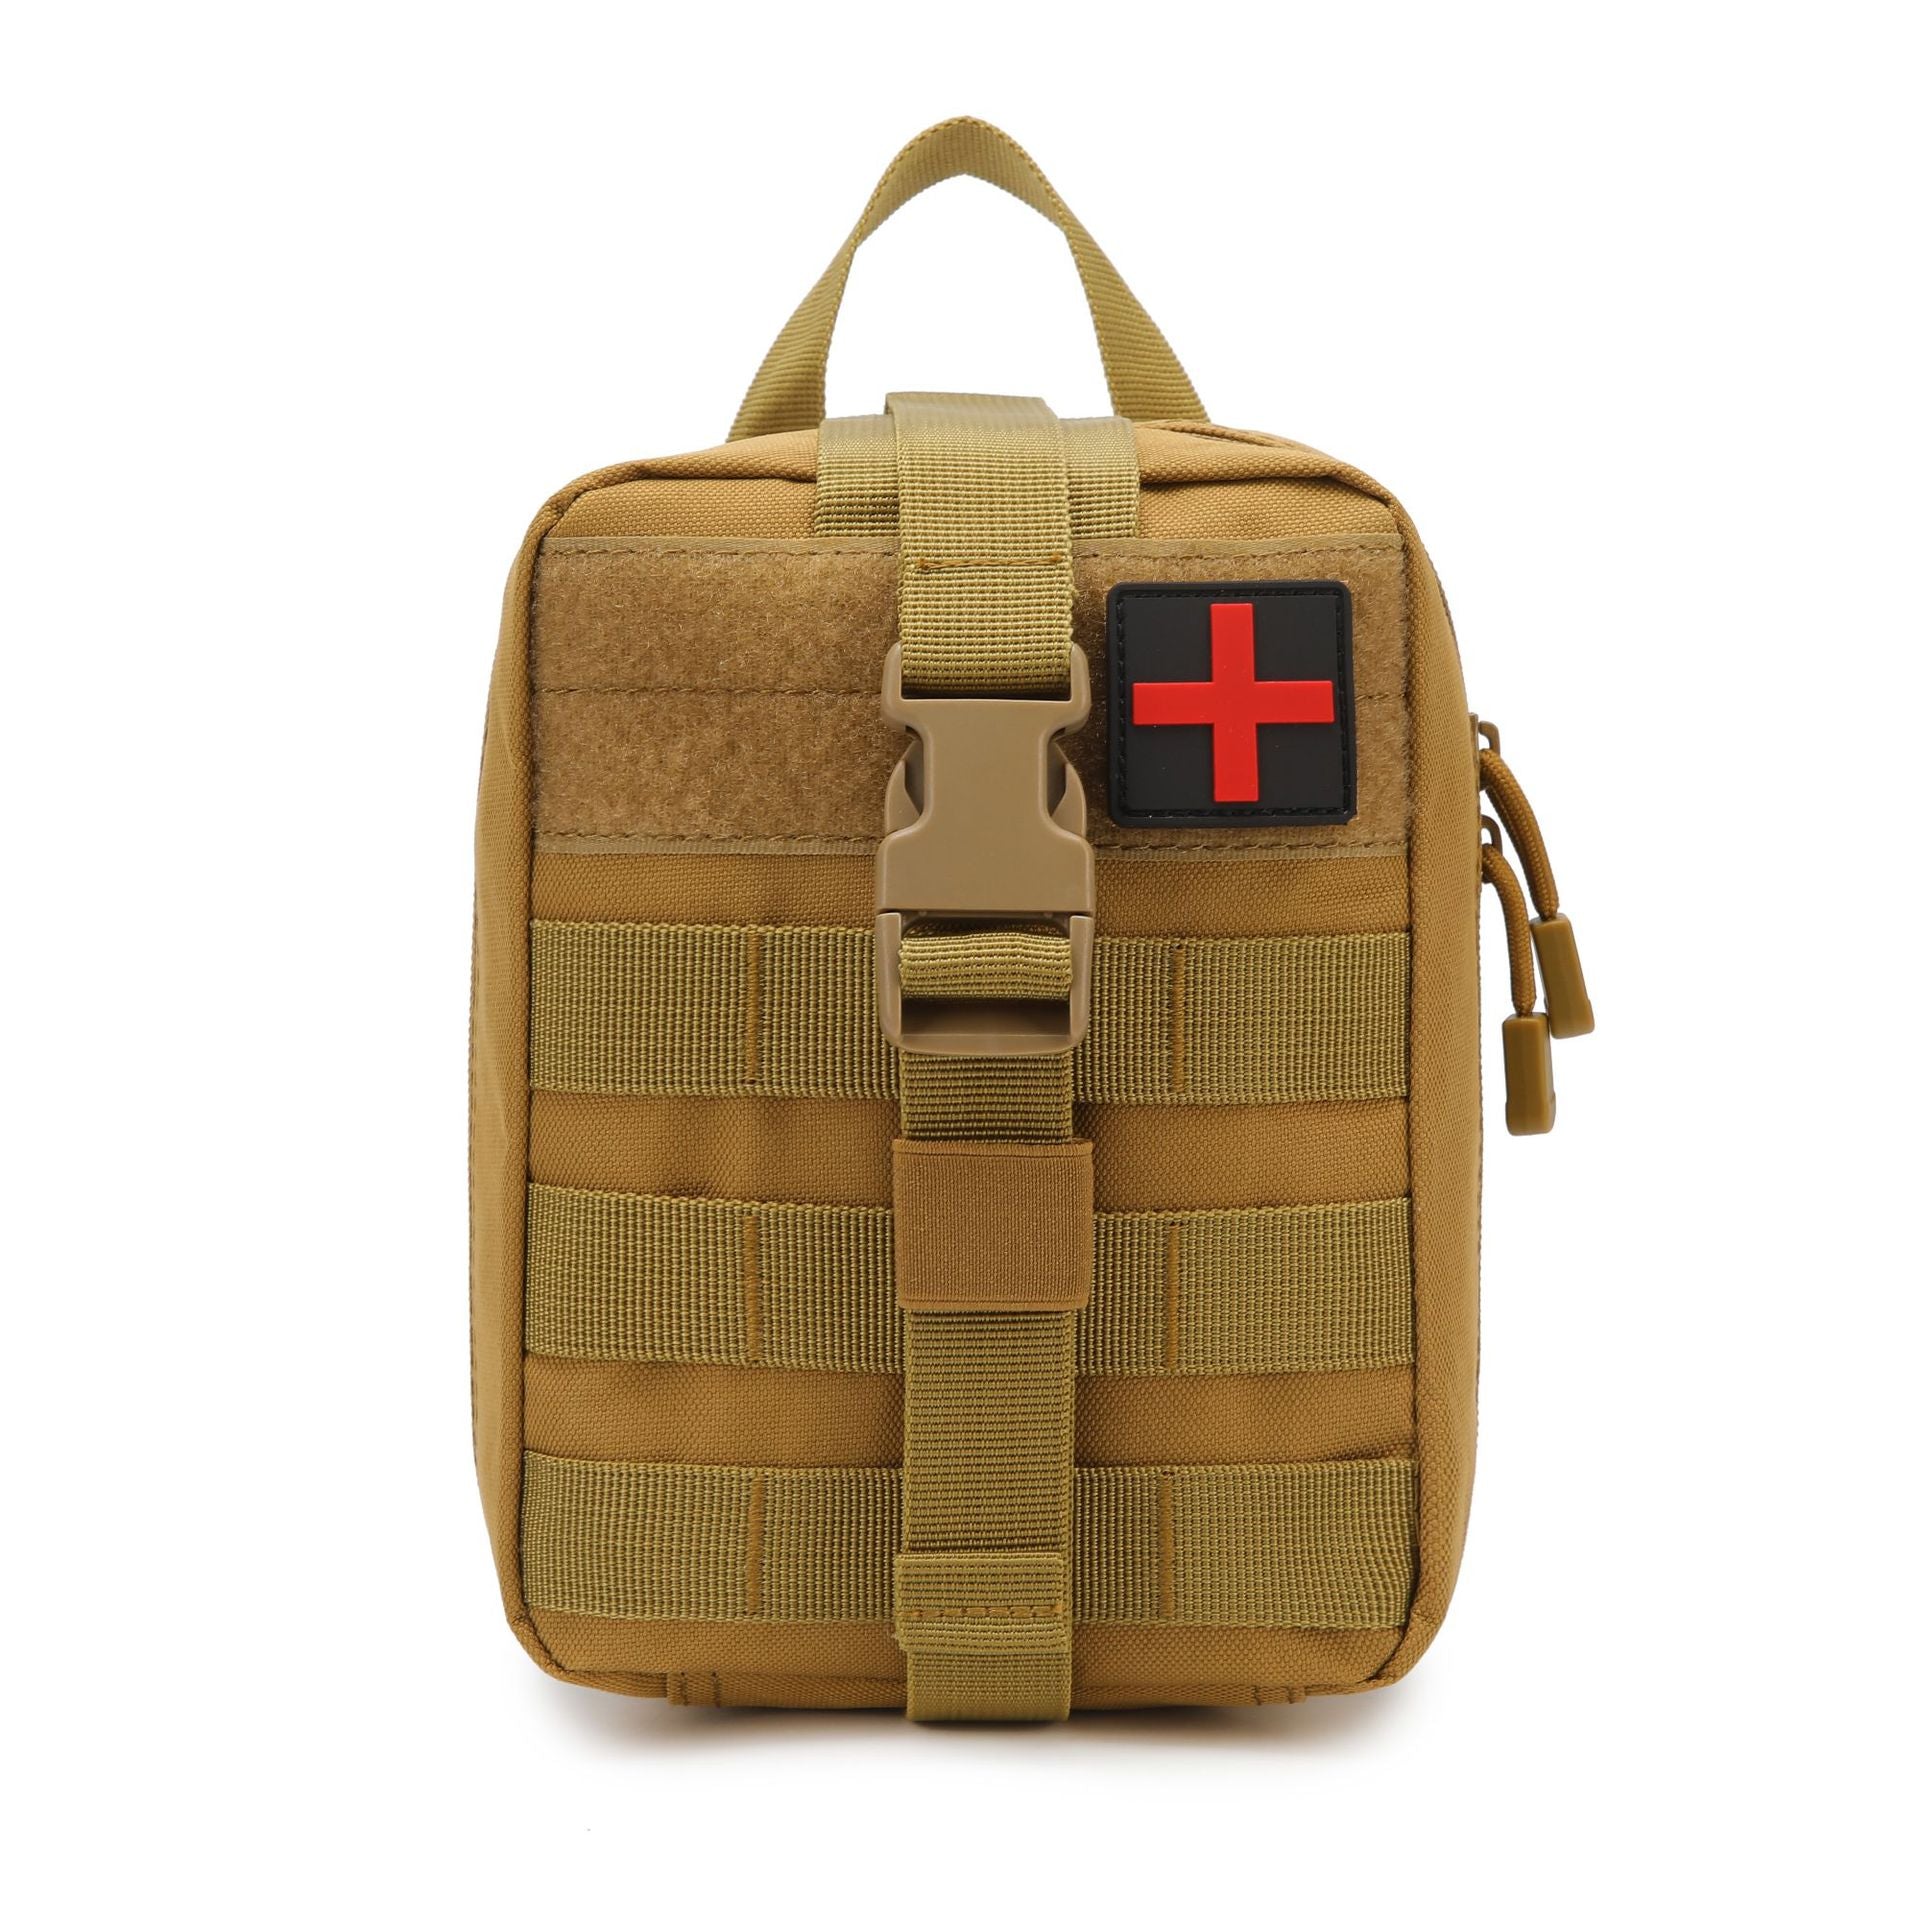 First Aid Kit Emergency Medical Kit